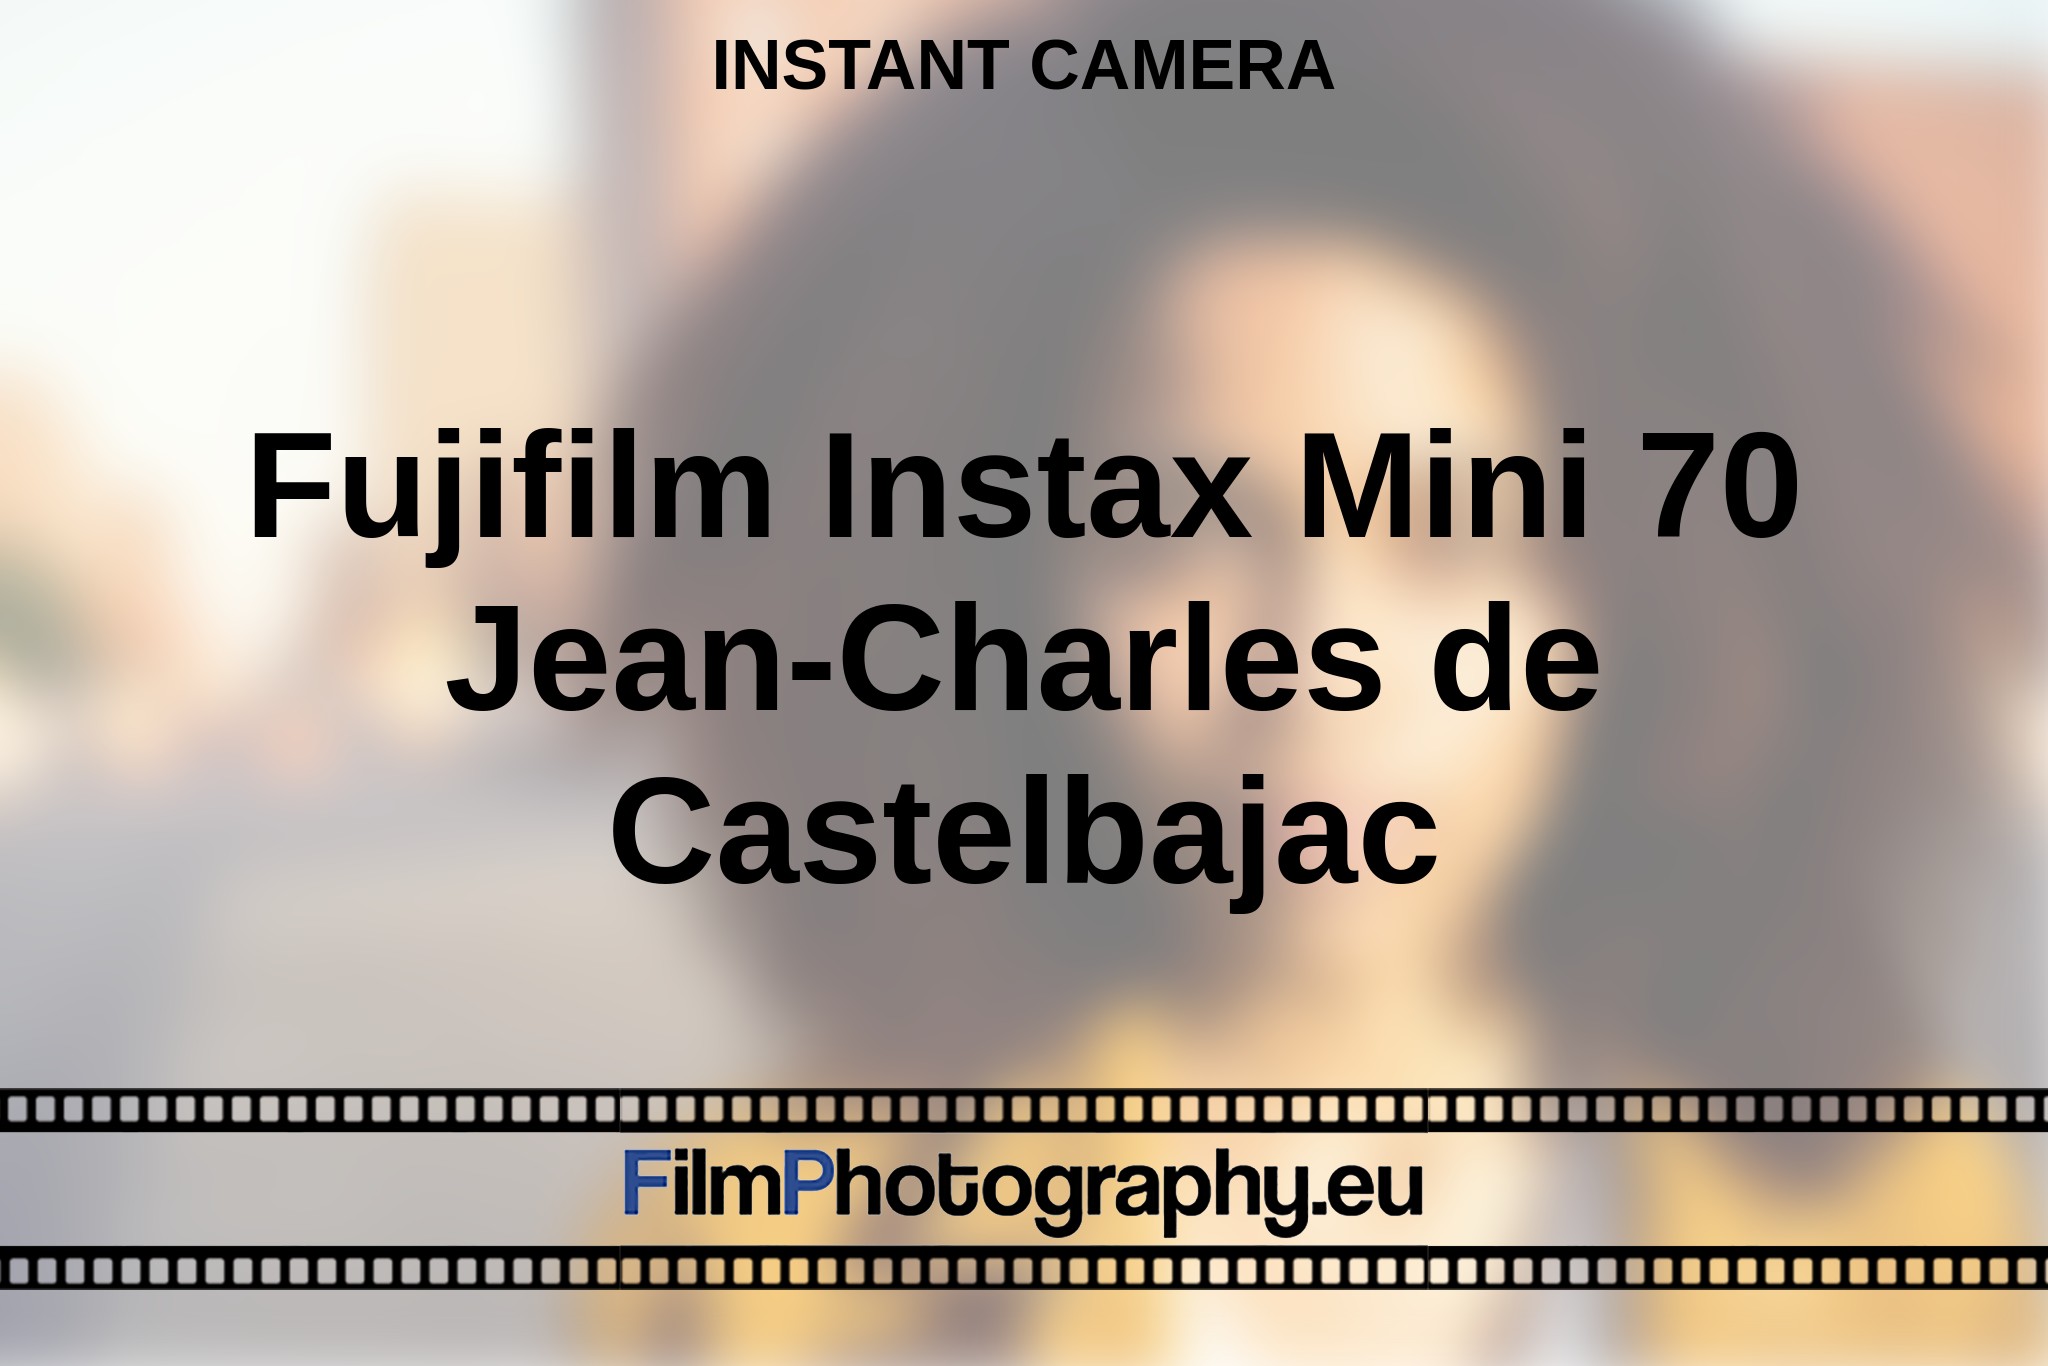 fujifilm-instax-mini-70-jean-charles-de-castelbajac-instant-camera-bnv.jpg